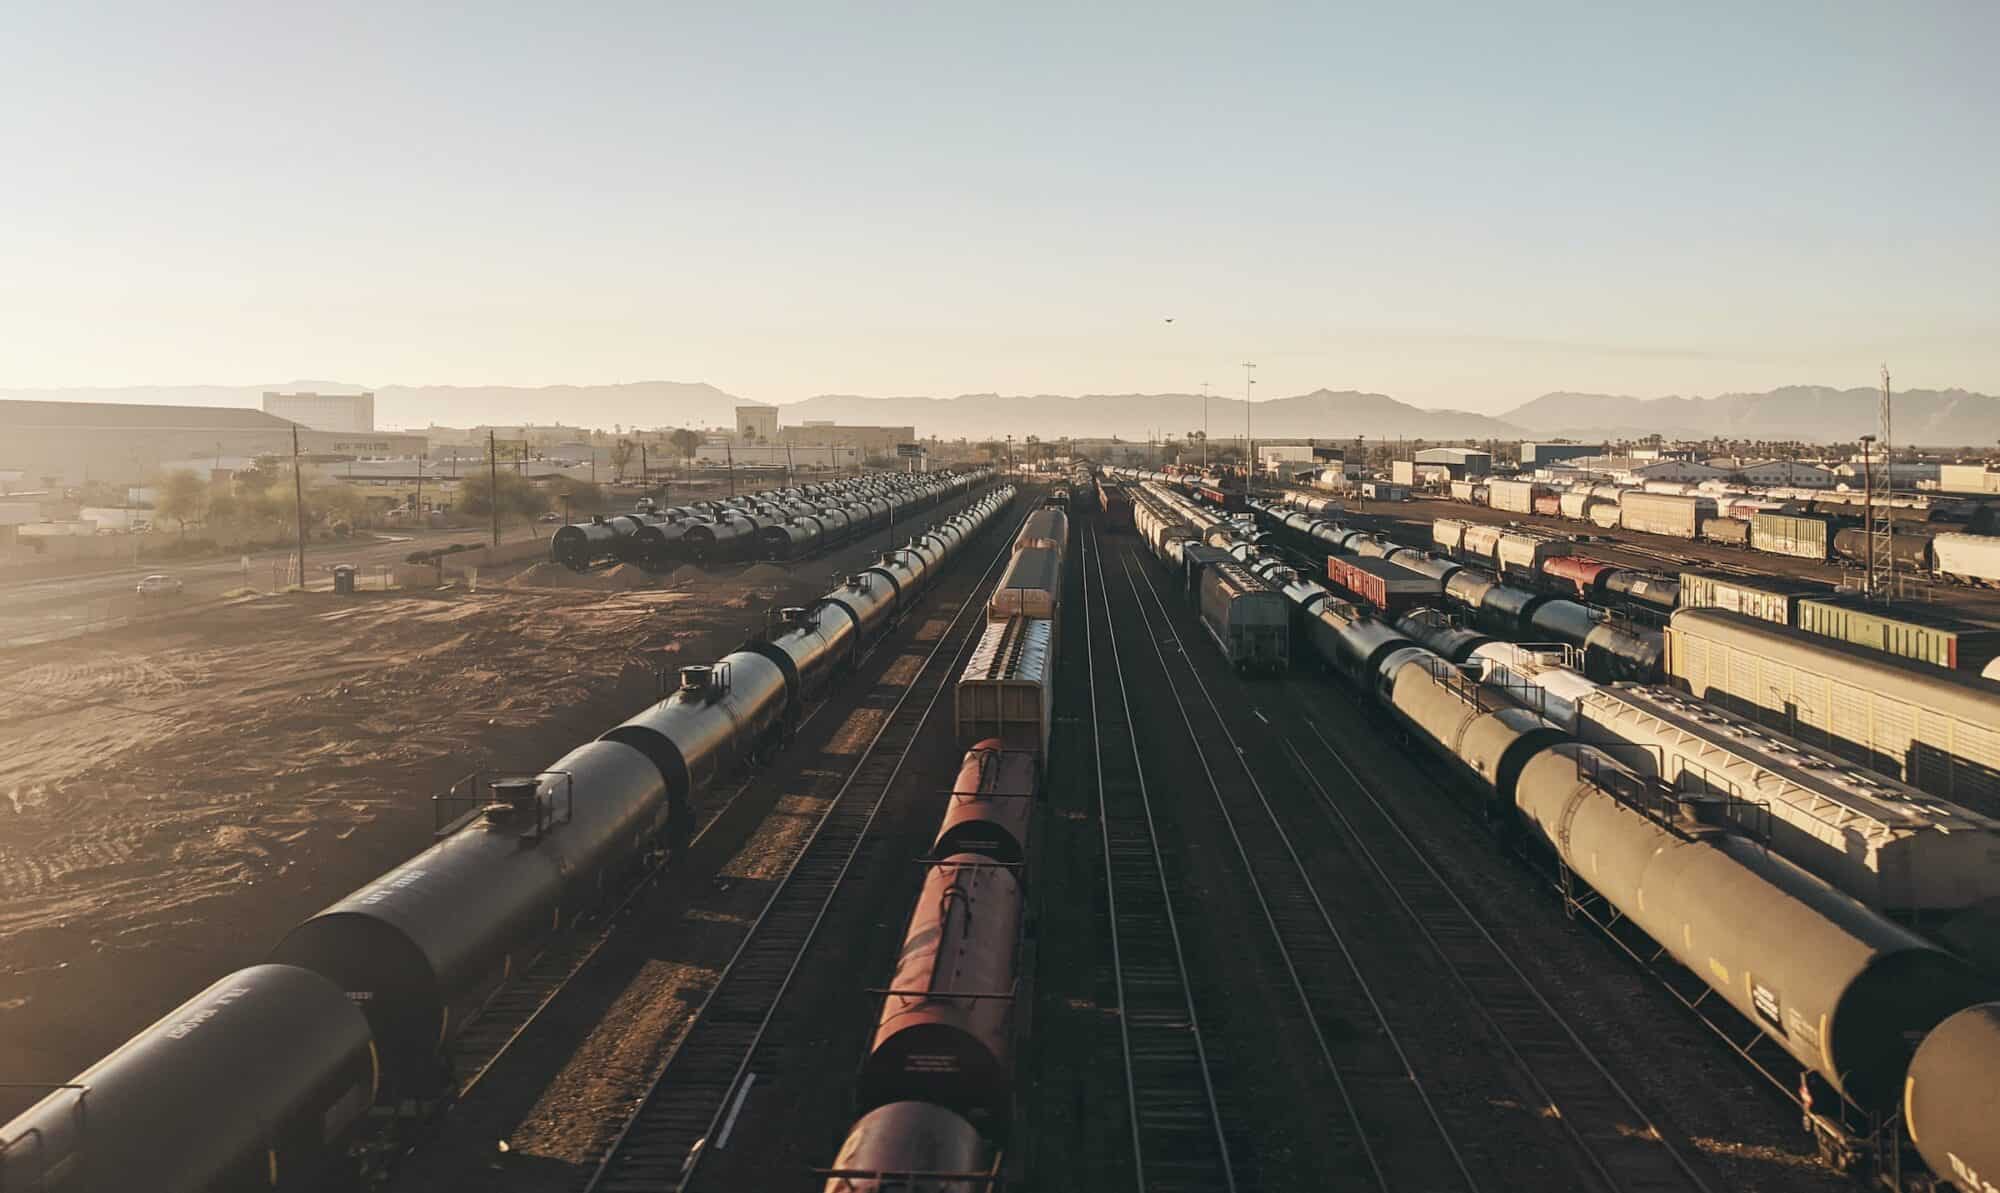 Freight rail cars sit idle in a train yard.